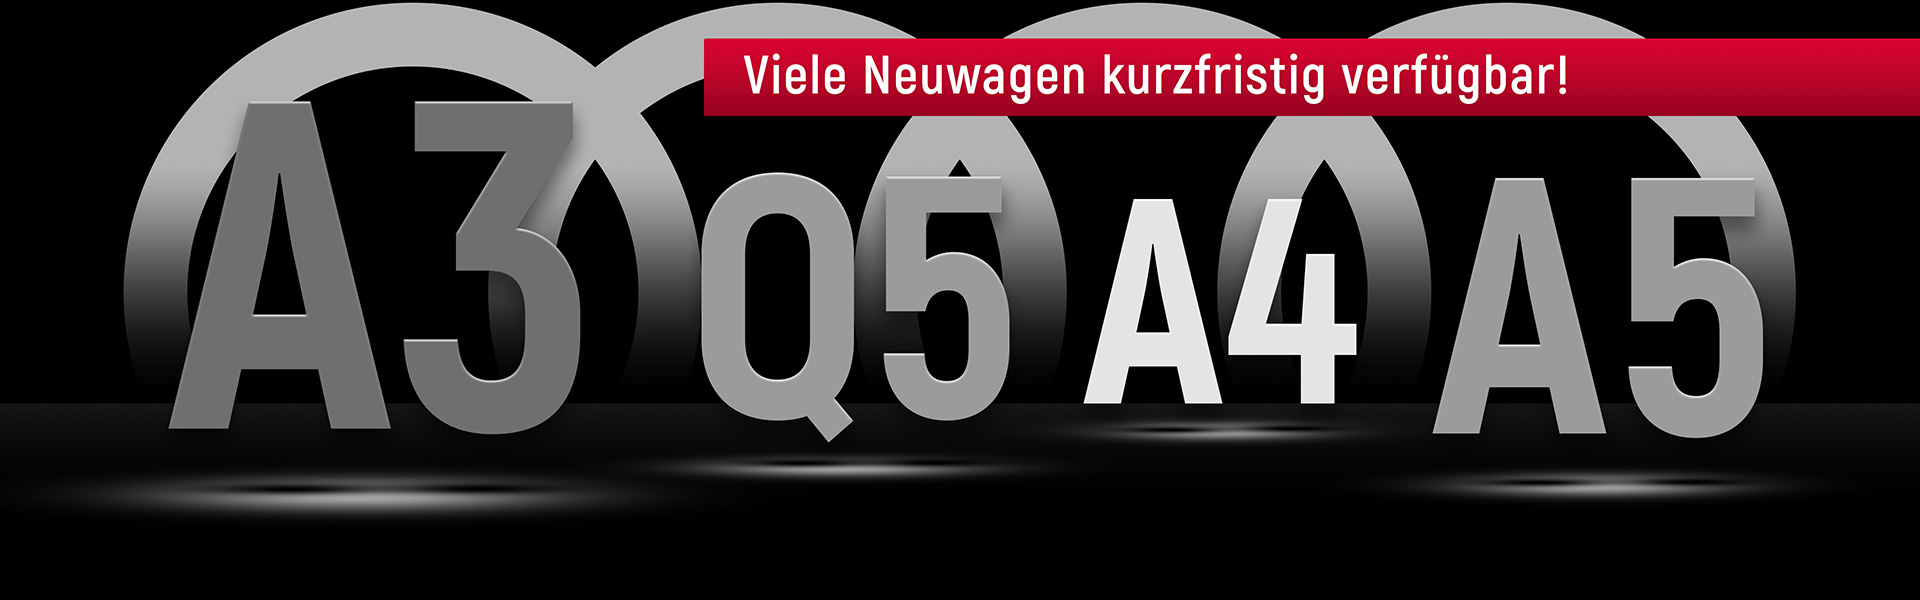 Audi Neuwagen Wochen